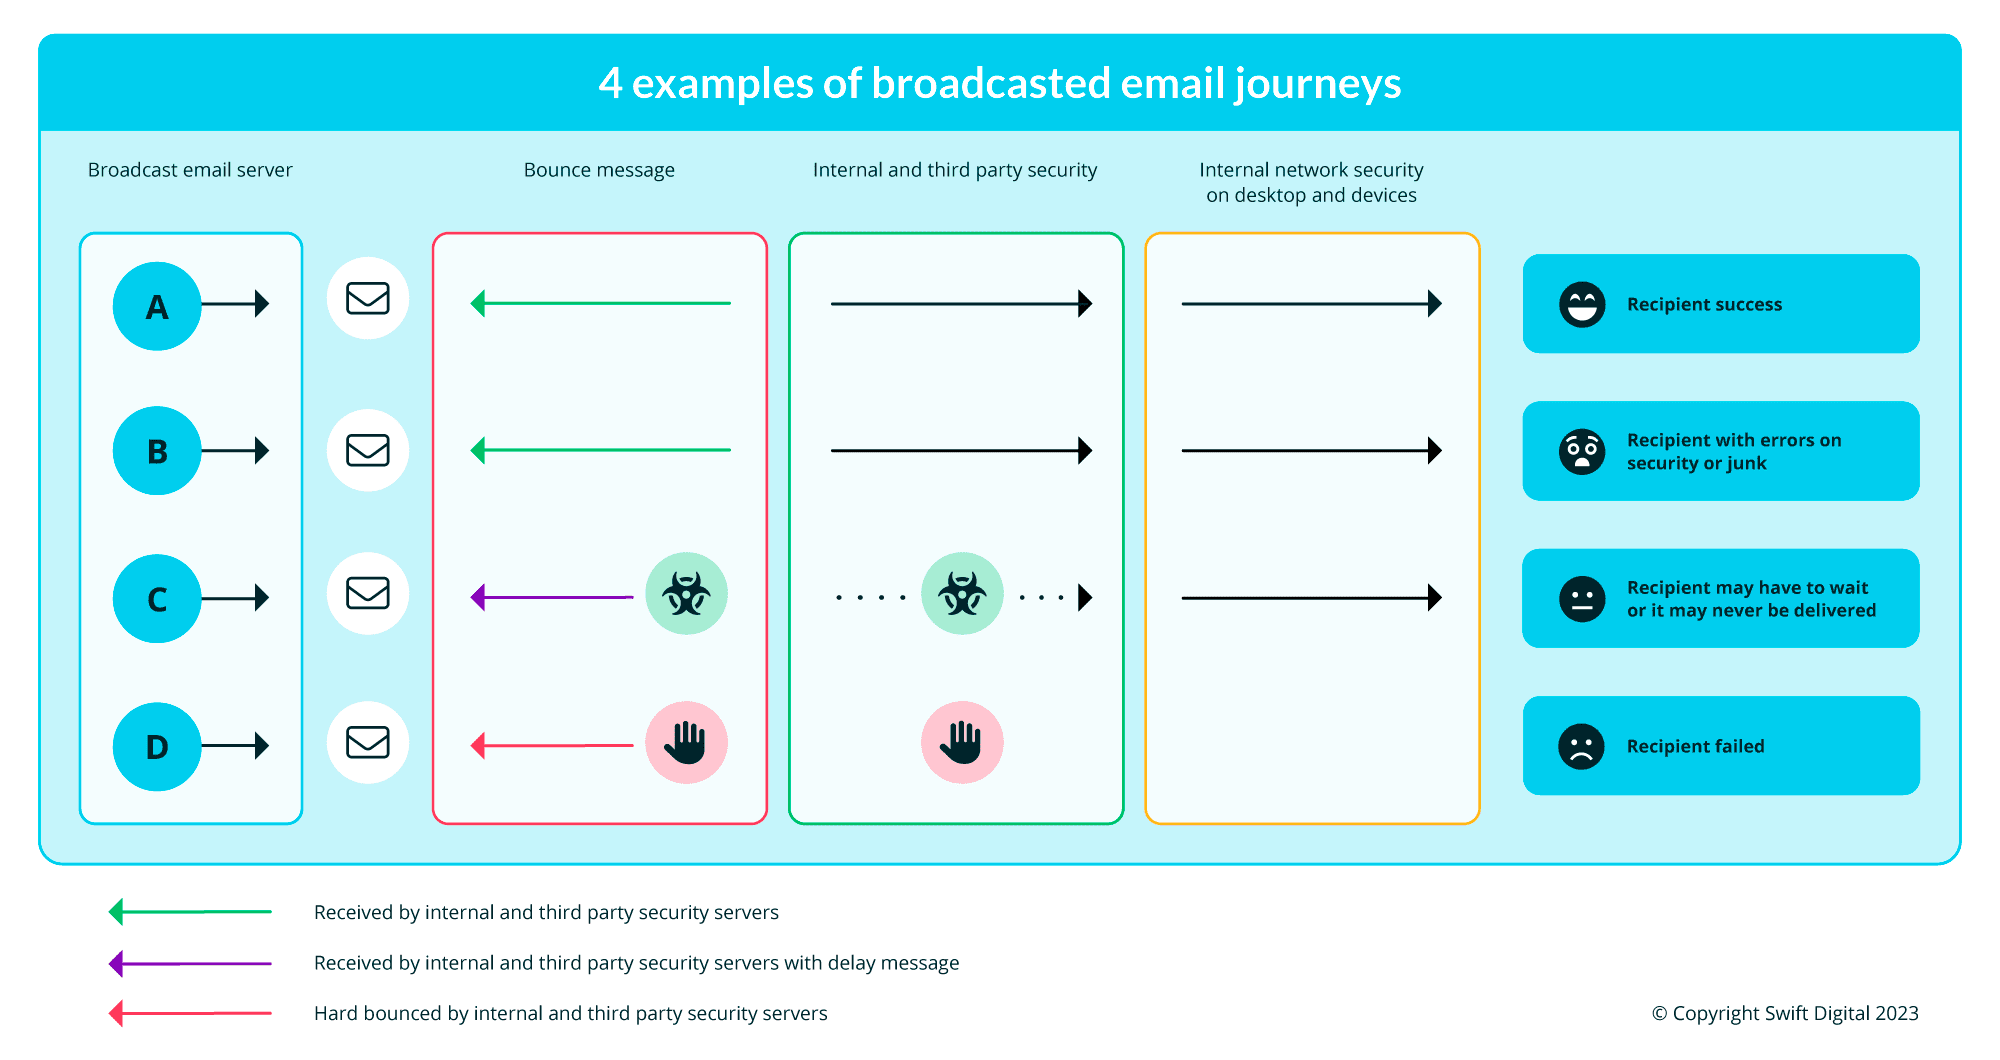 Swift Digital boardcast email journey's